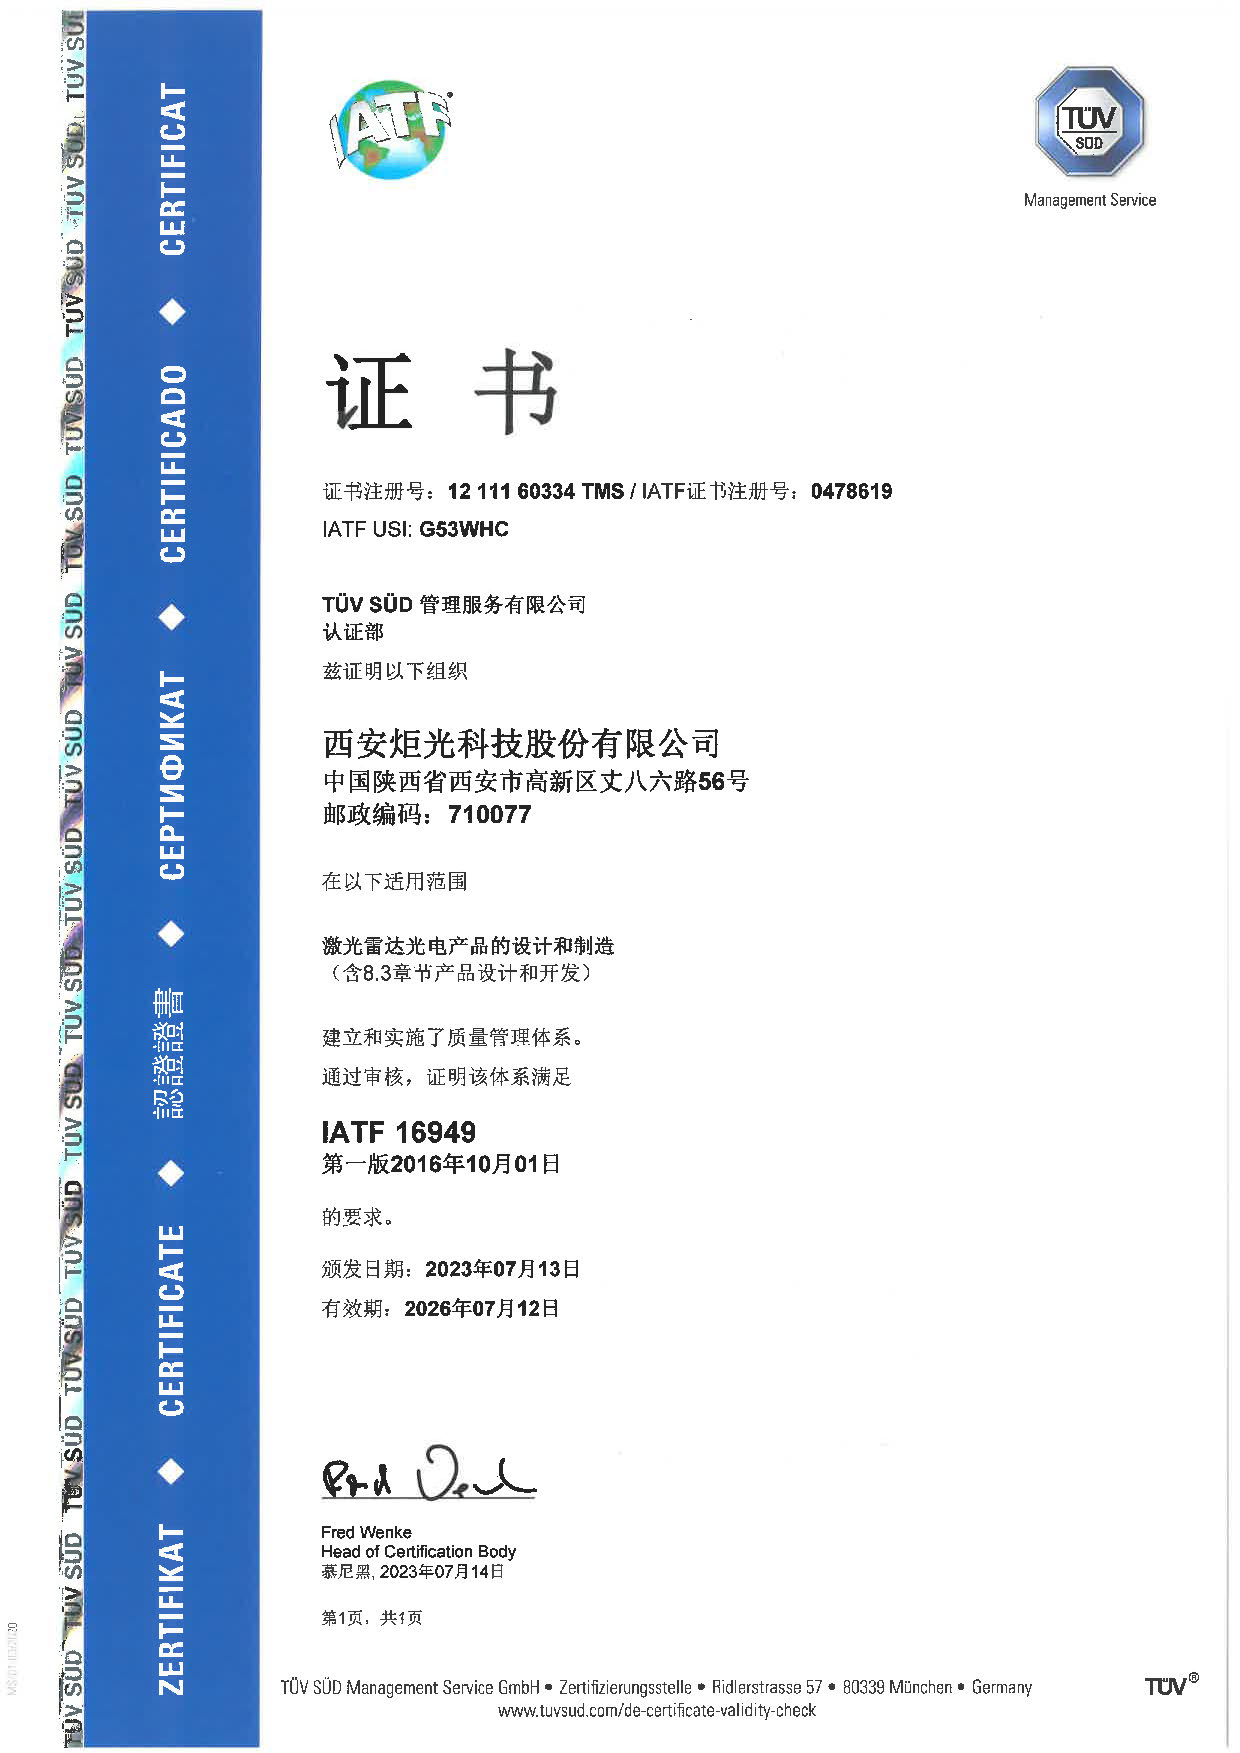 IATF 16949  Xi'an（Headquarter）